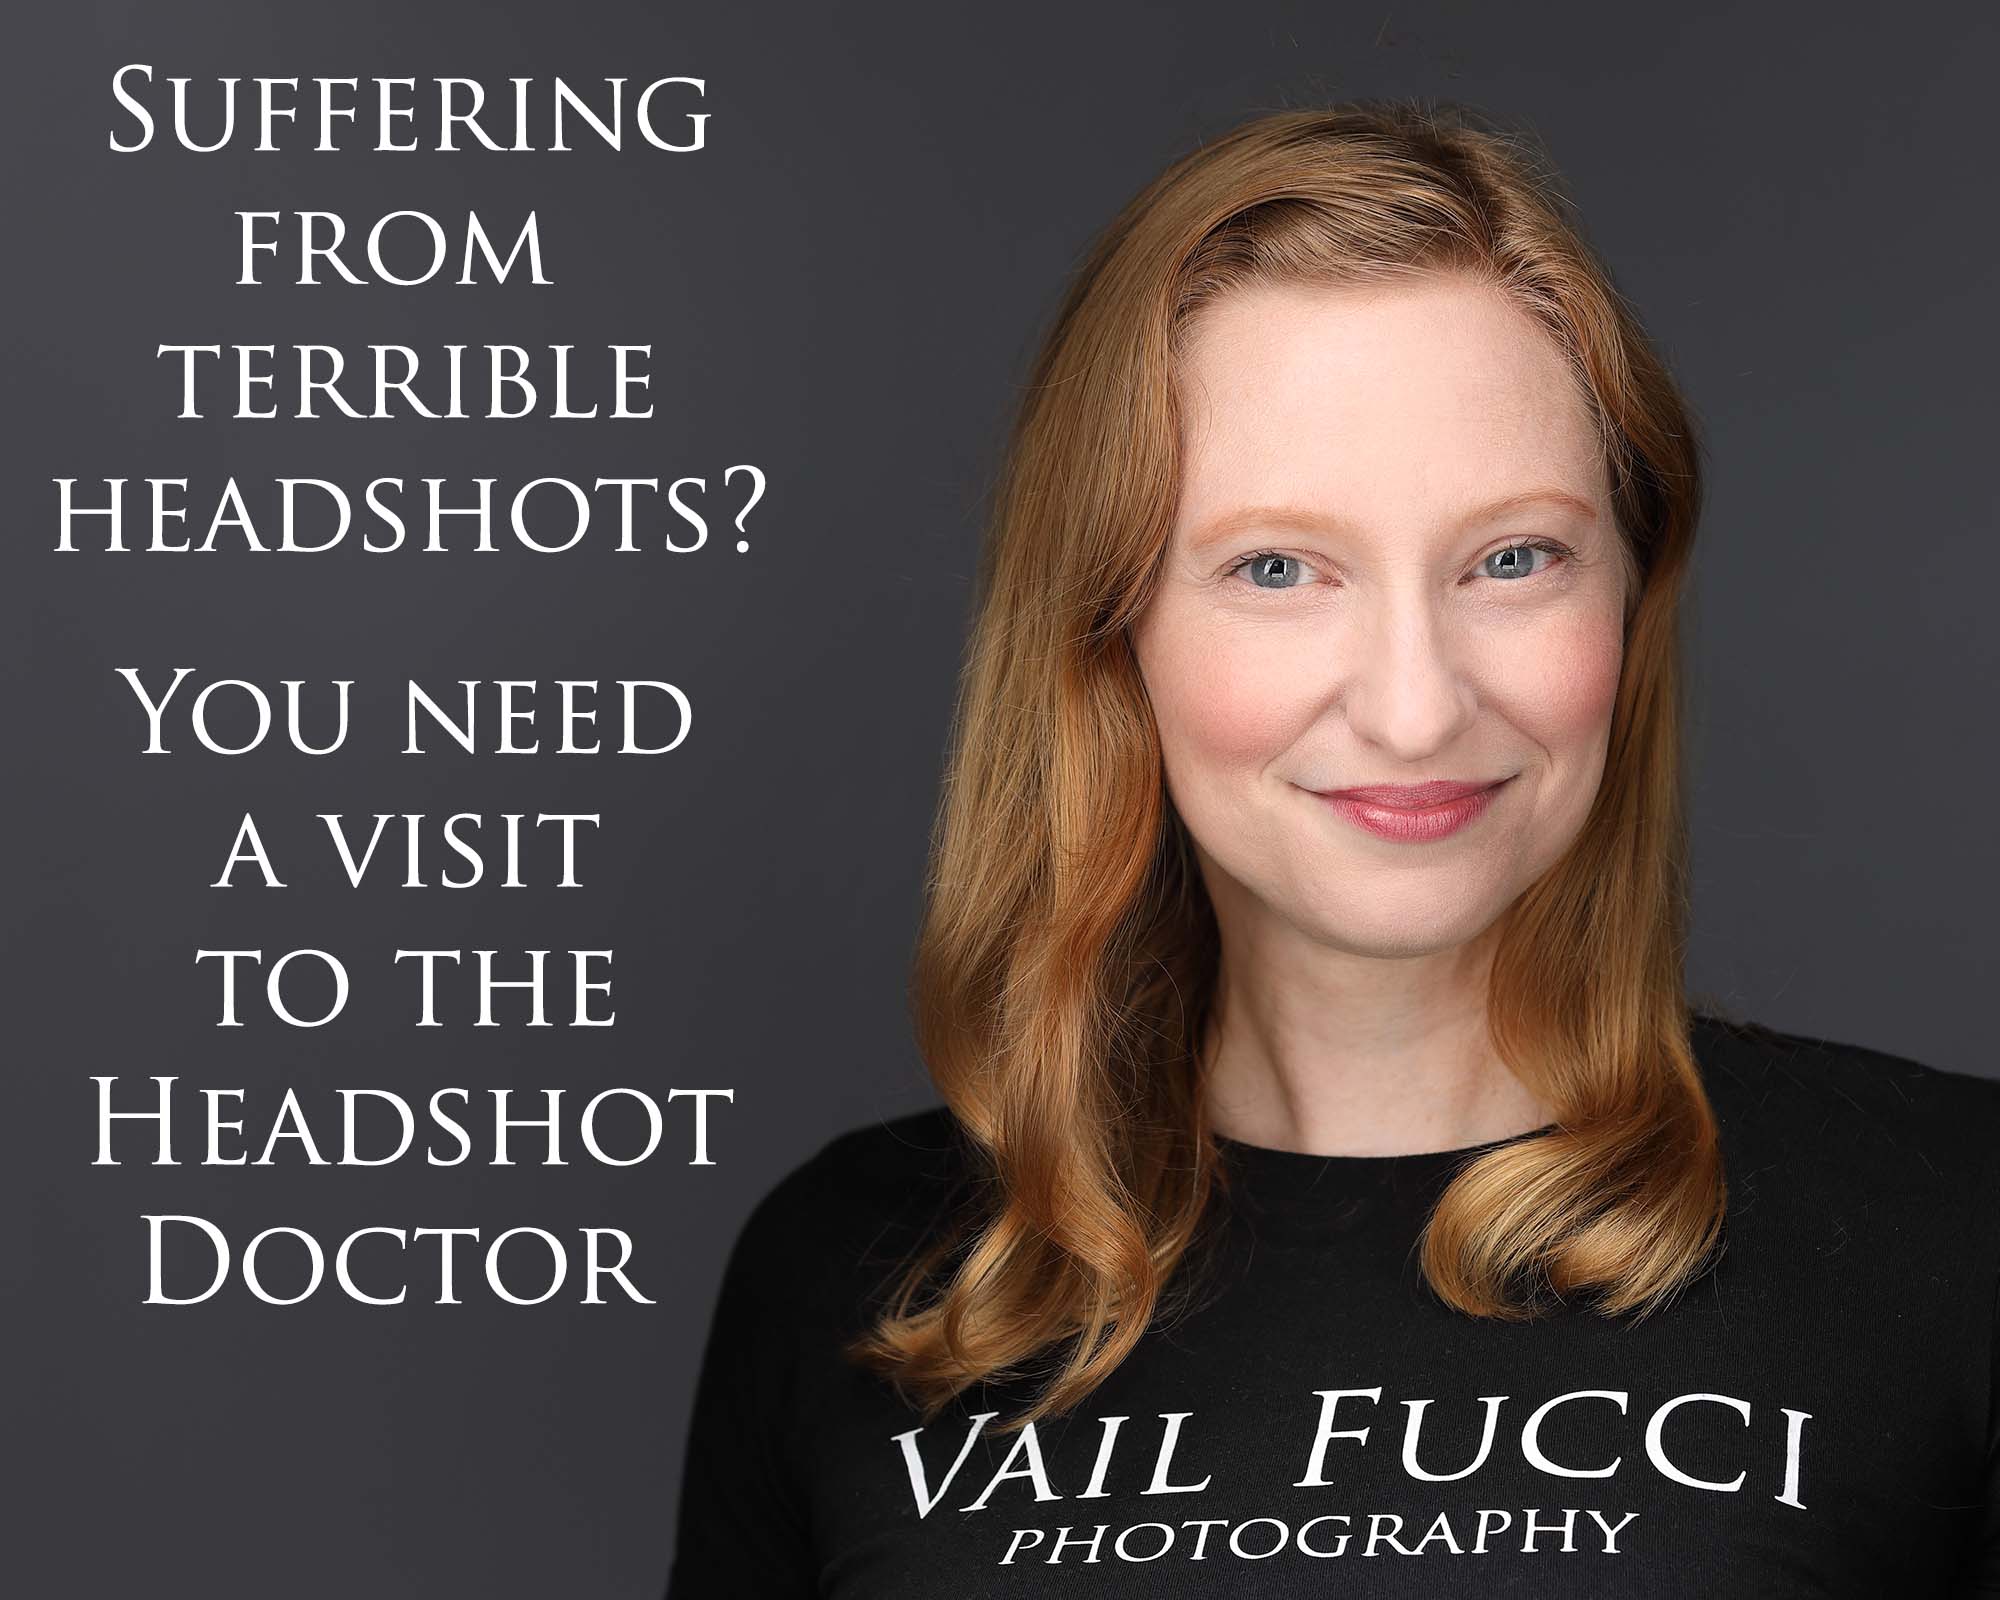 Vail fucci headshot doctor2